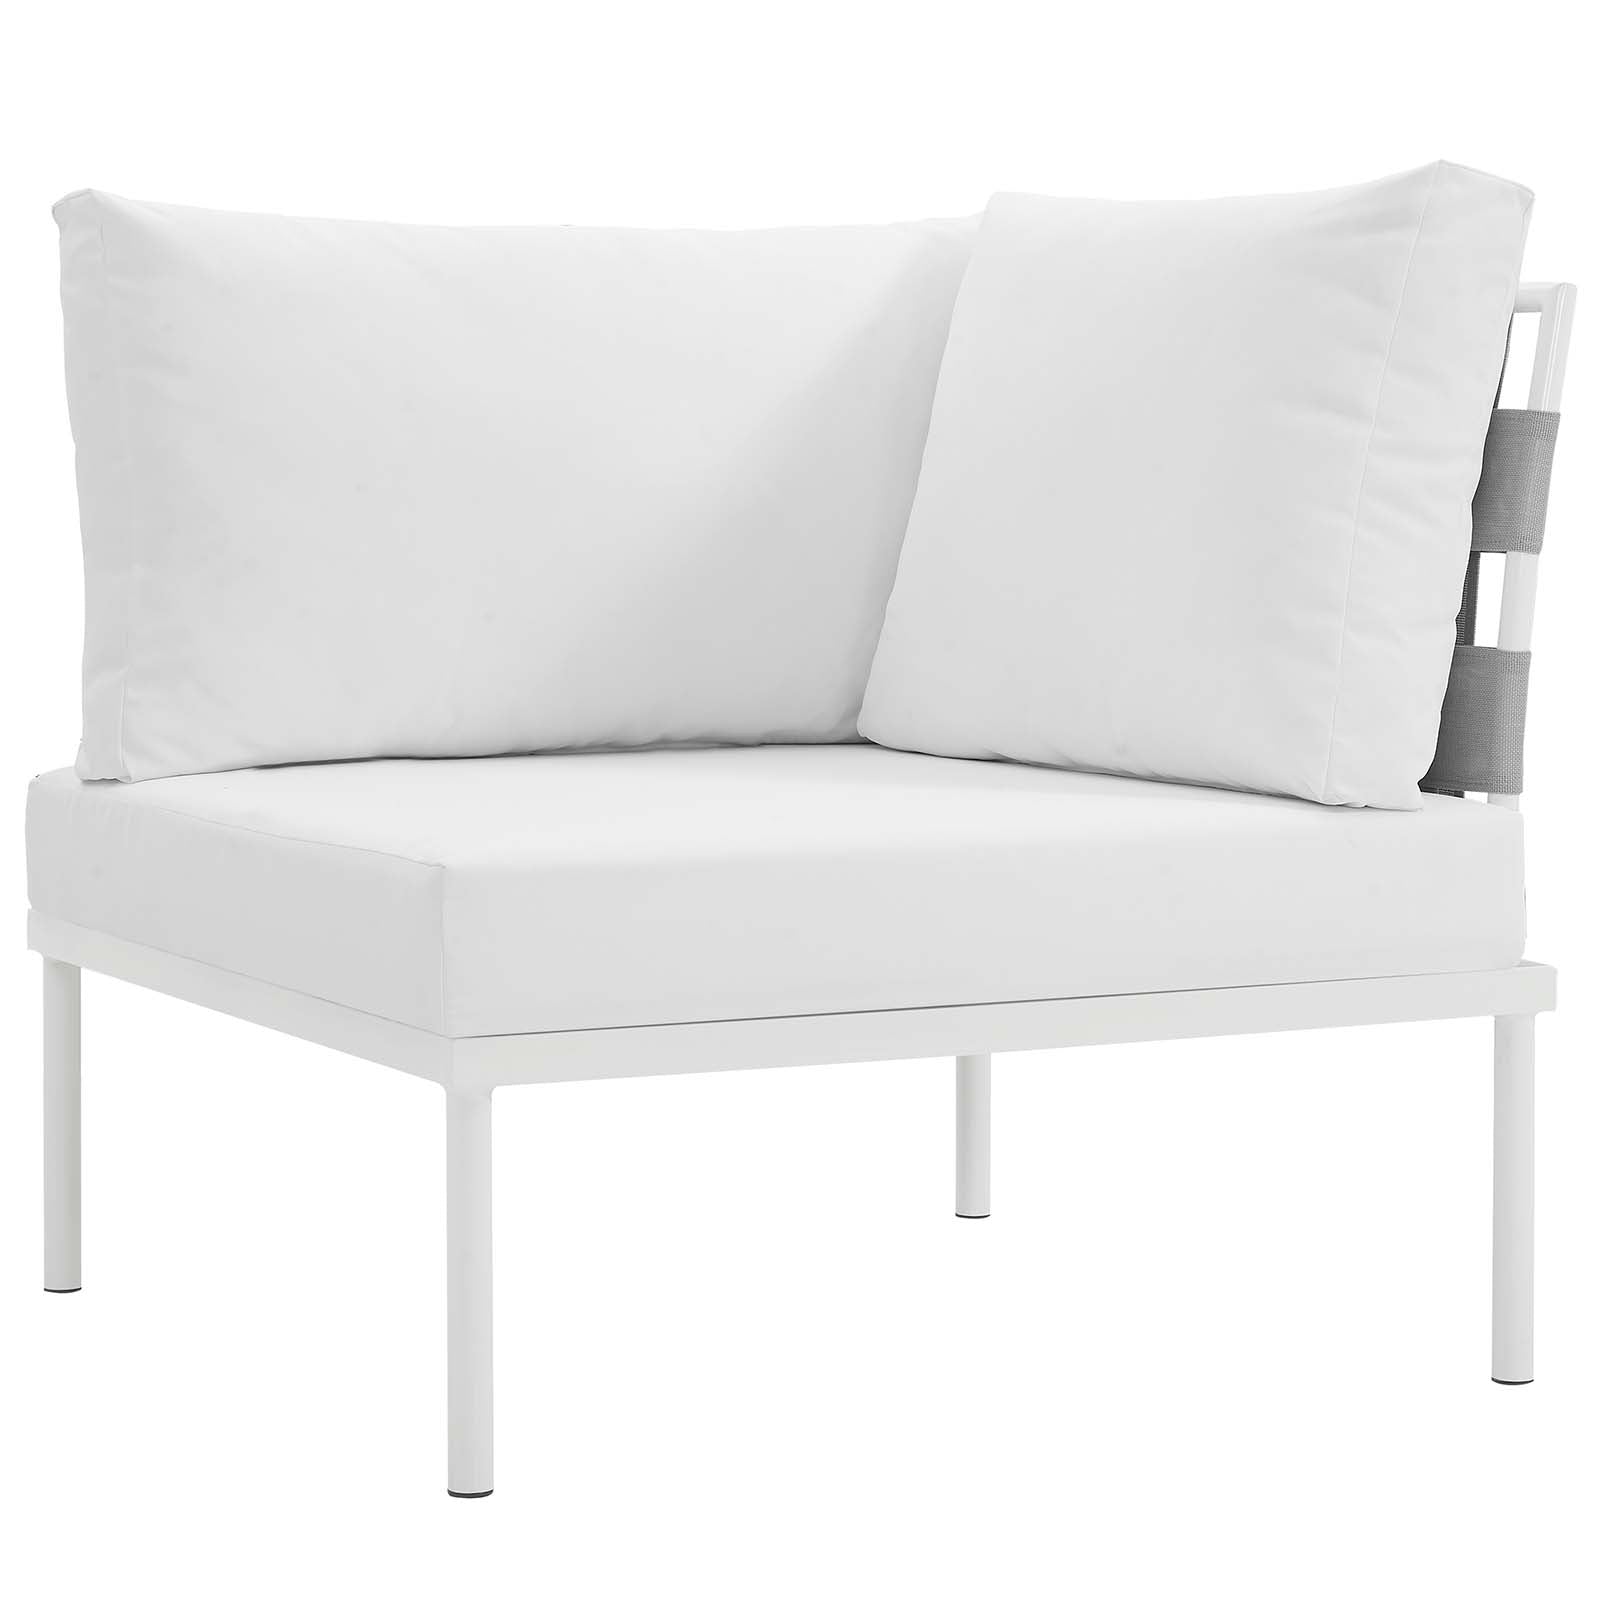 Modway Outdoor Conversation Sets - Harmony 5 Piece Outdoor Patio Aluminum Sectional Sofa Set White